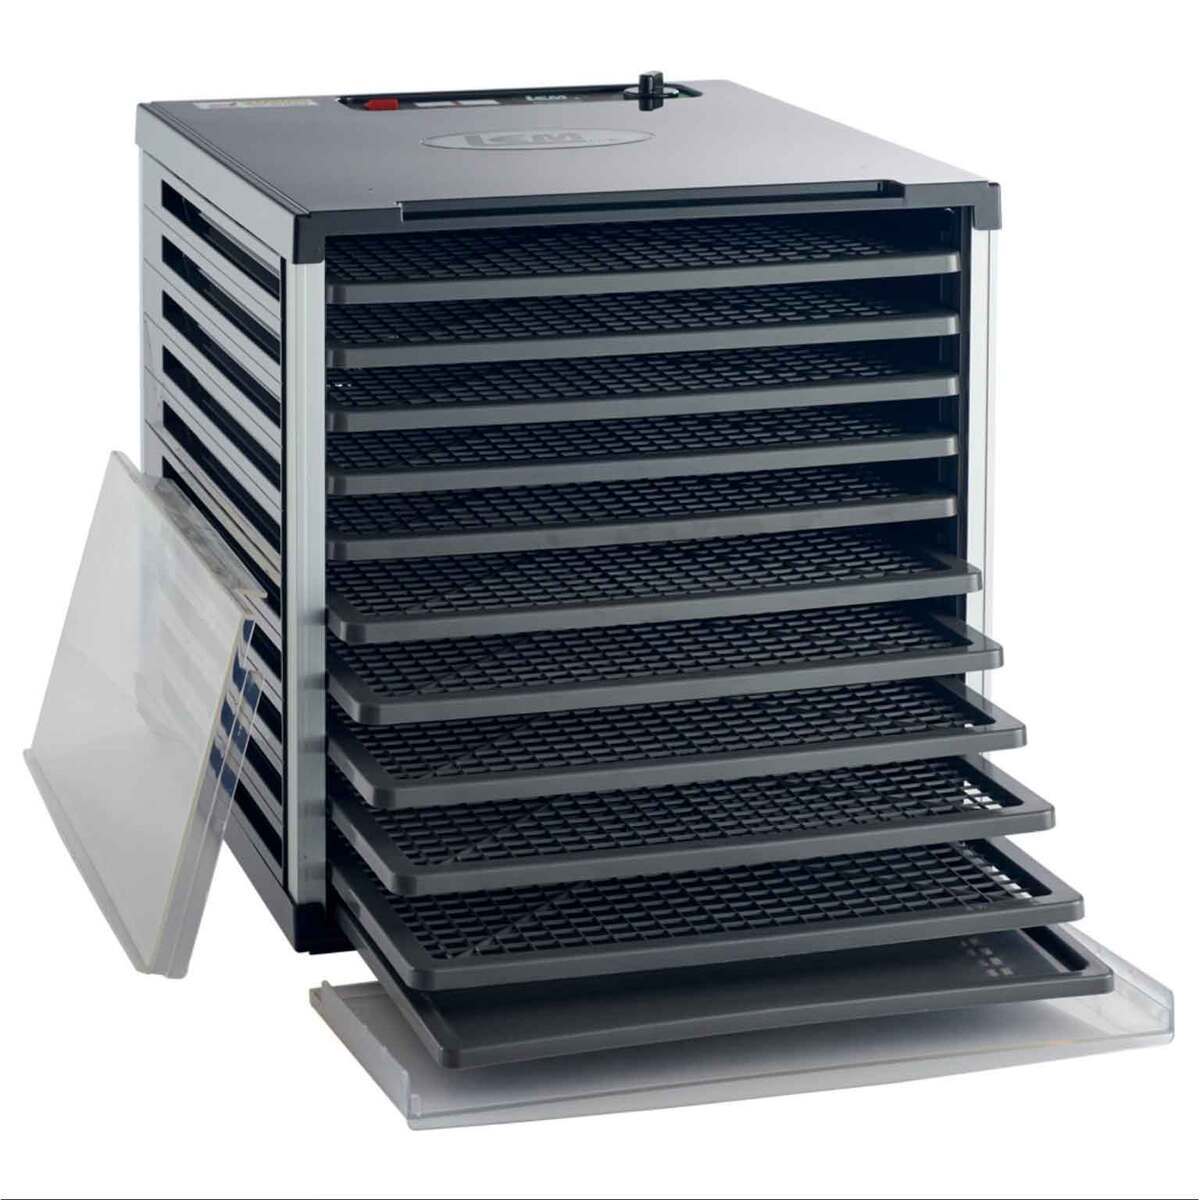 Weston Pro-1000 Stainless Steel Food Dehydrator - 10 Tray